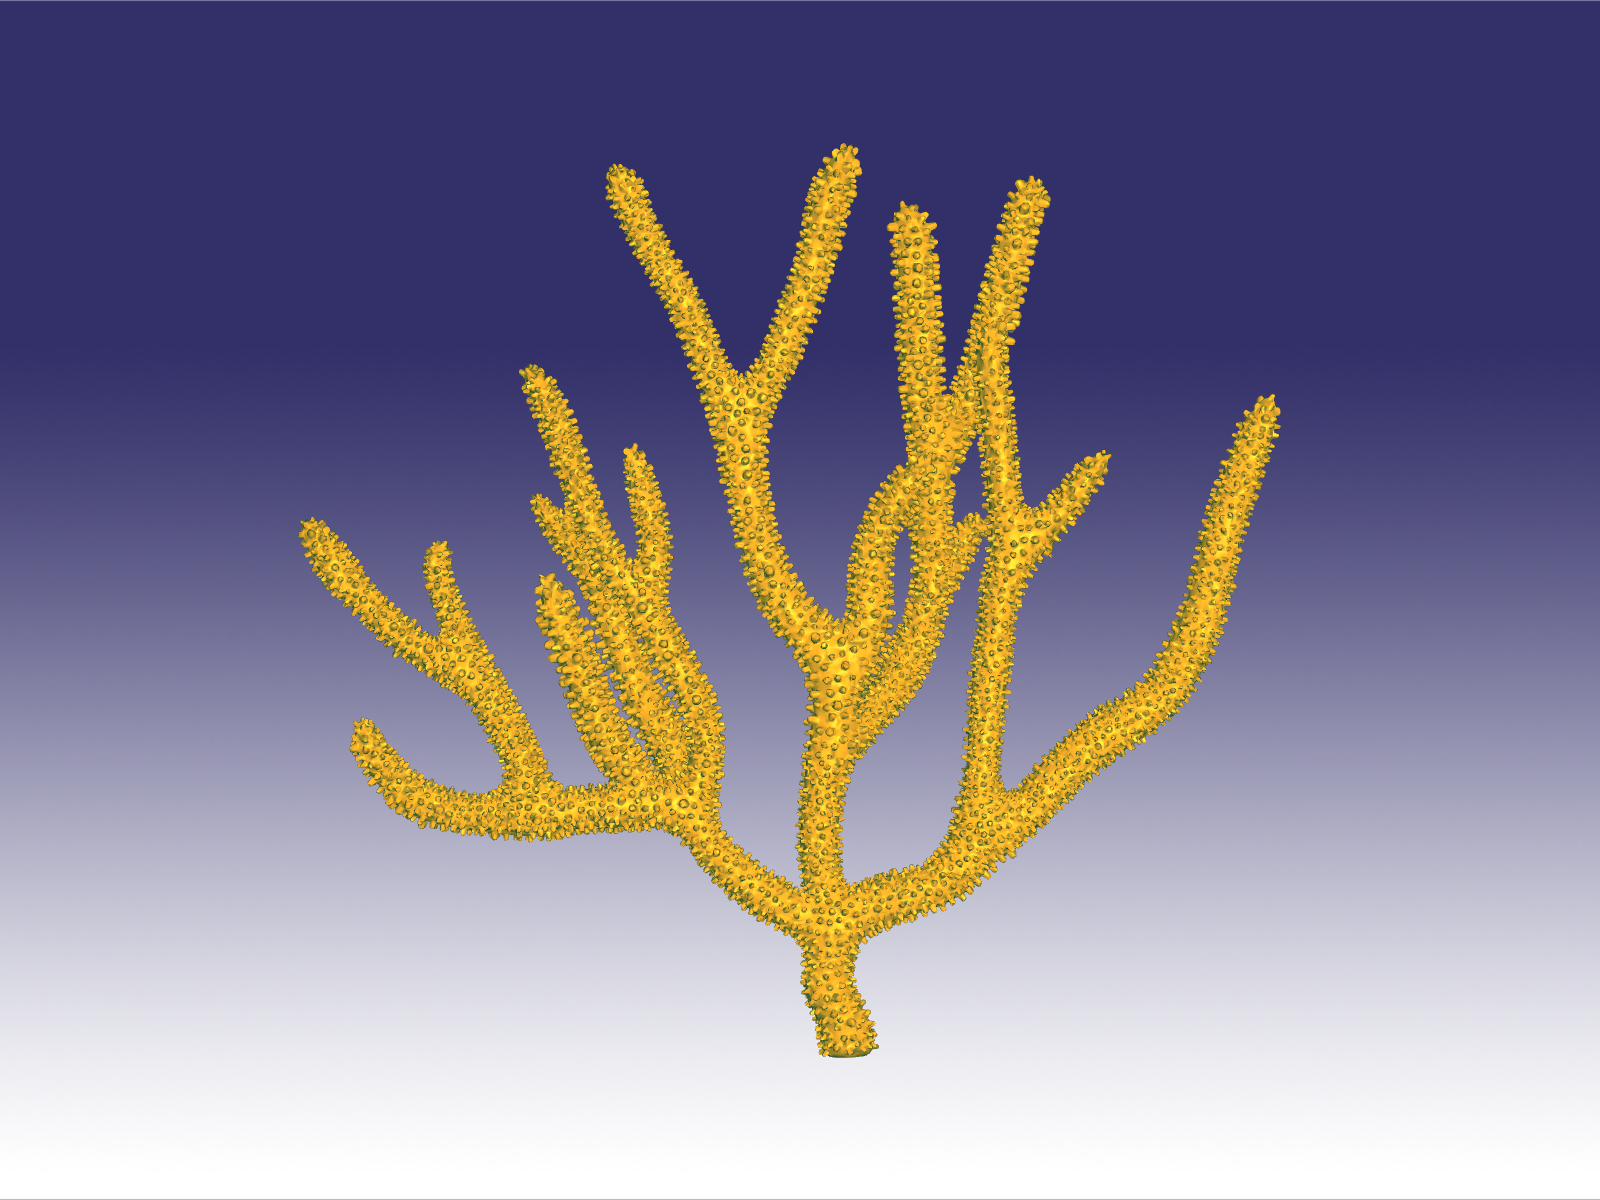 purple gorgonia coral.png Download OBJ file Purple gorgonia coral • 3D printable design, Dsignrcmc